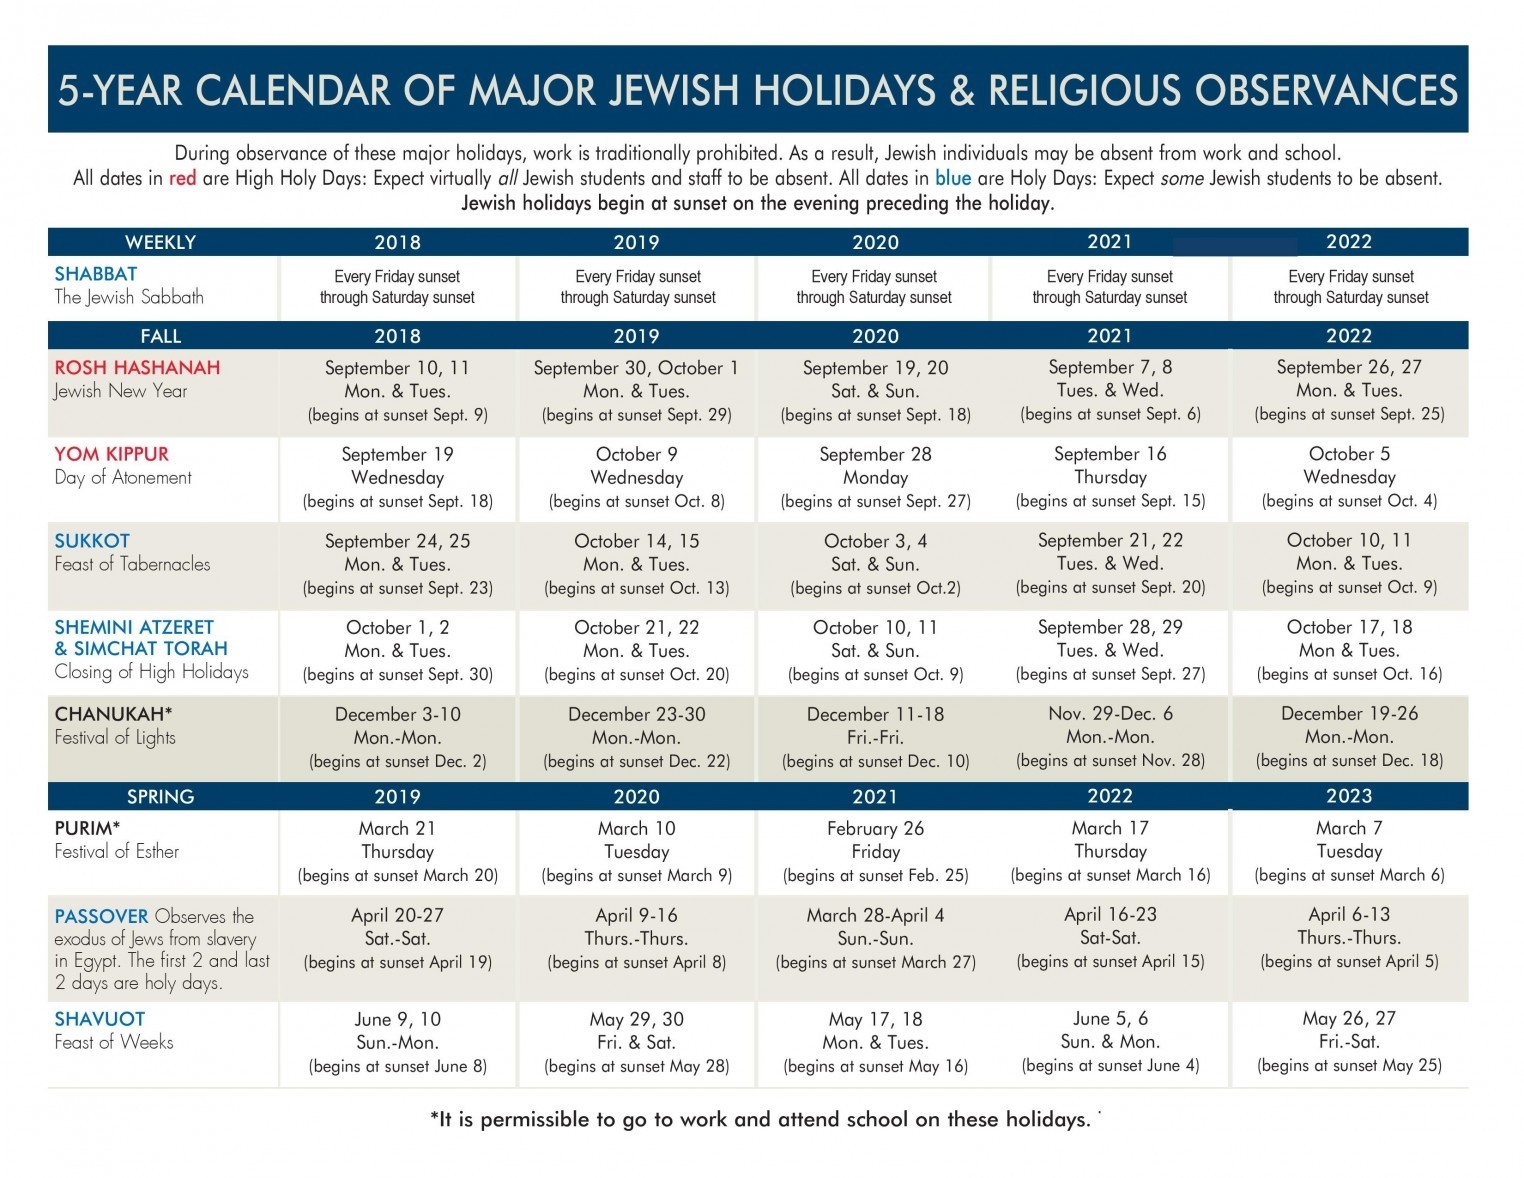 5-Year Jewish Holiday Calendar | Jewish Federation Of-Calendar 2020 Jewish Holidays